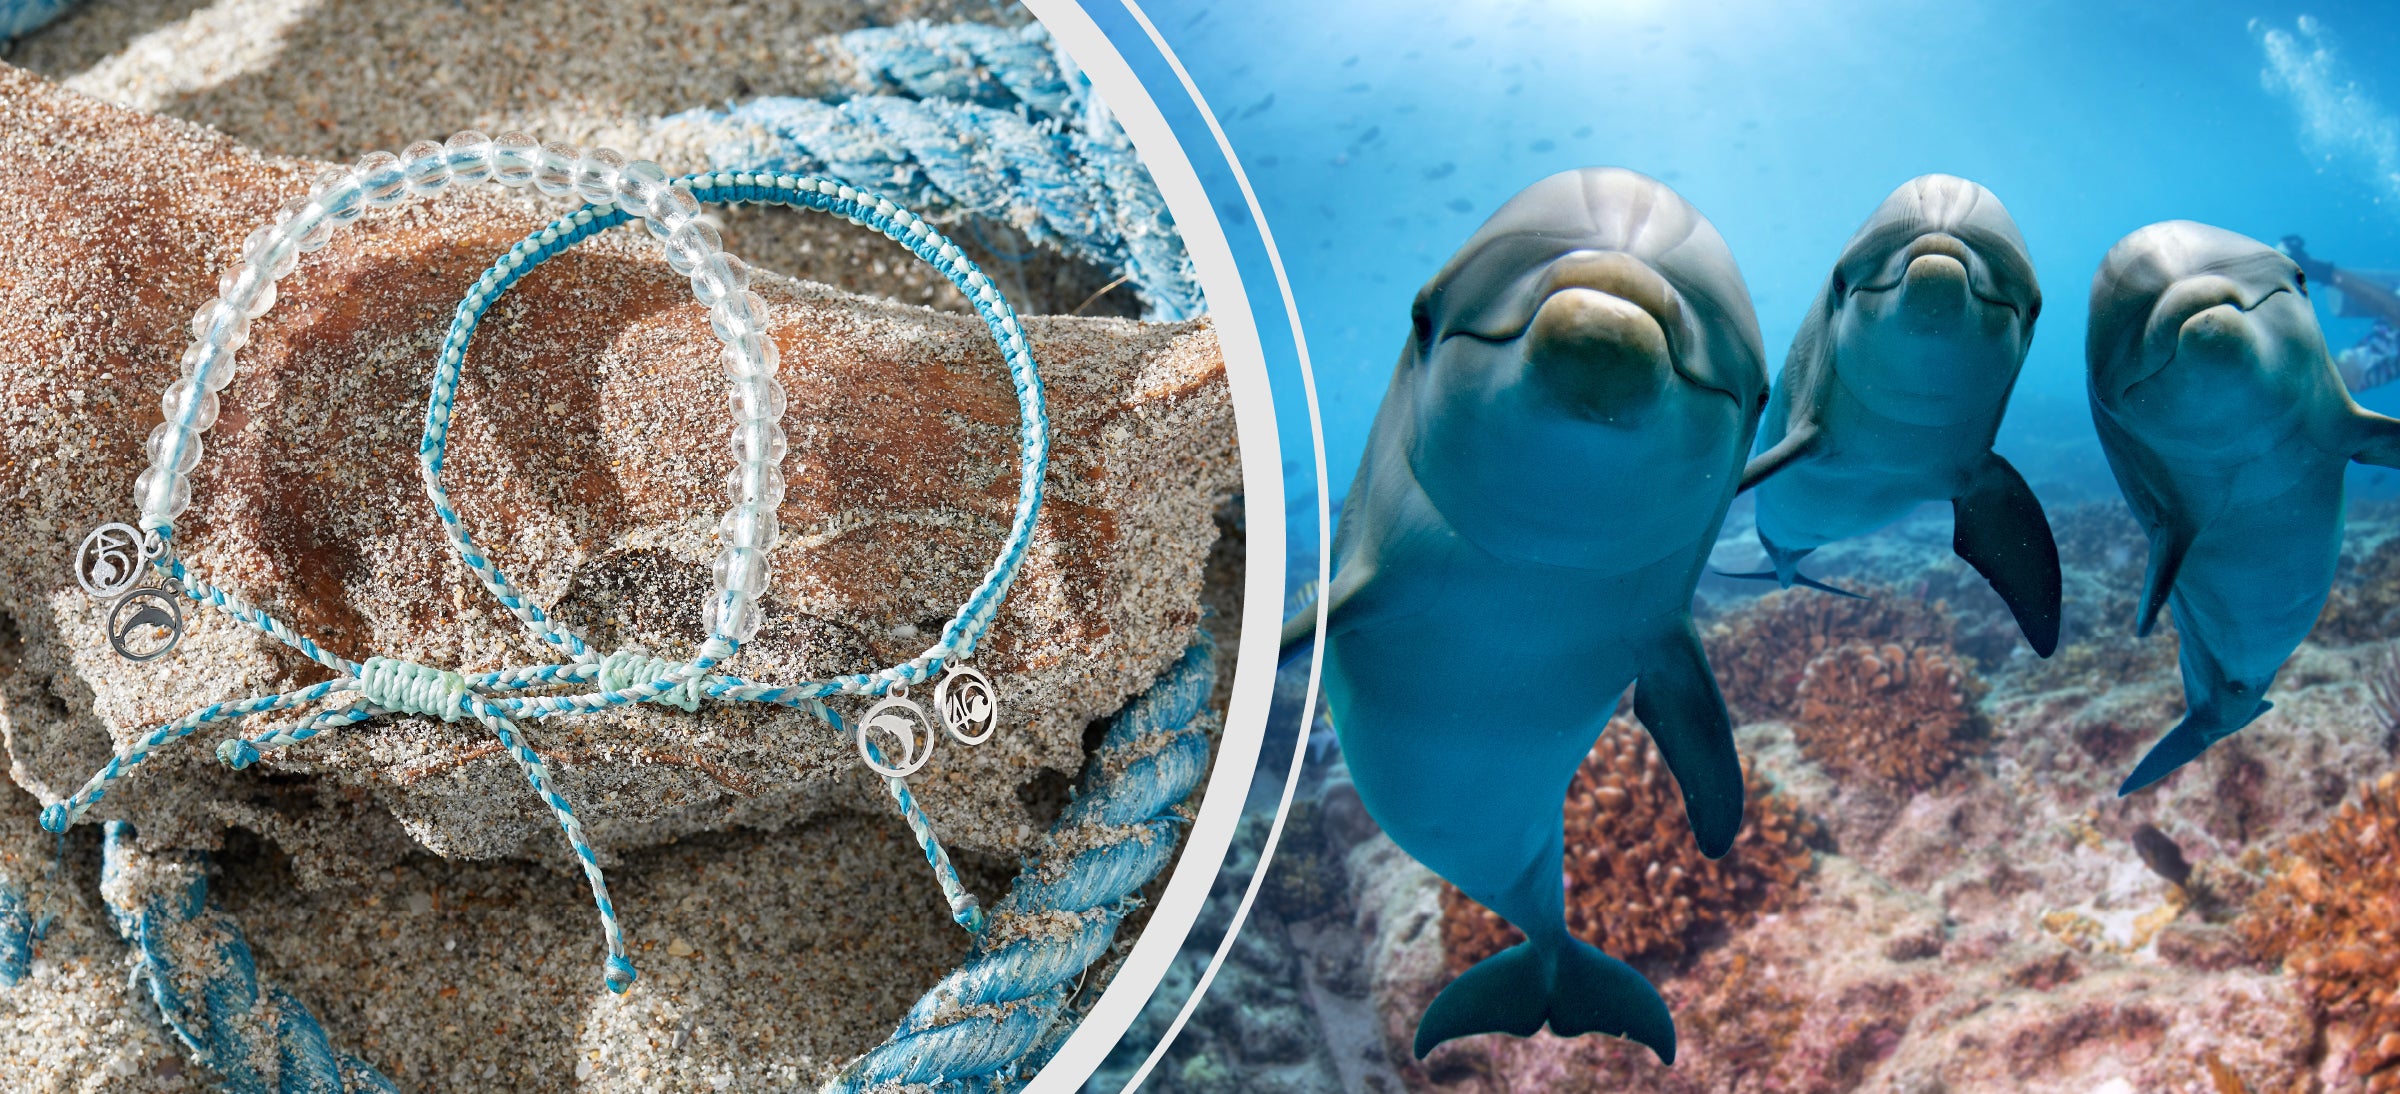 4Ocean Bracelets Help With Ocean Cleanup  YouTube